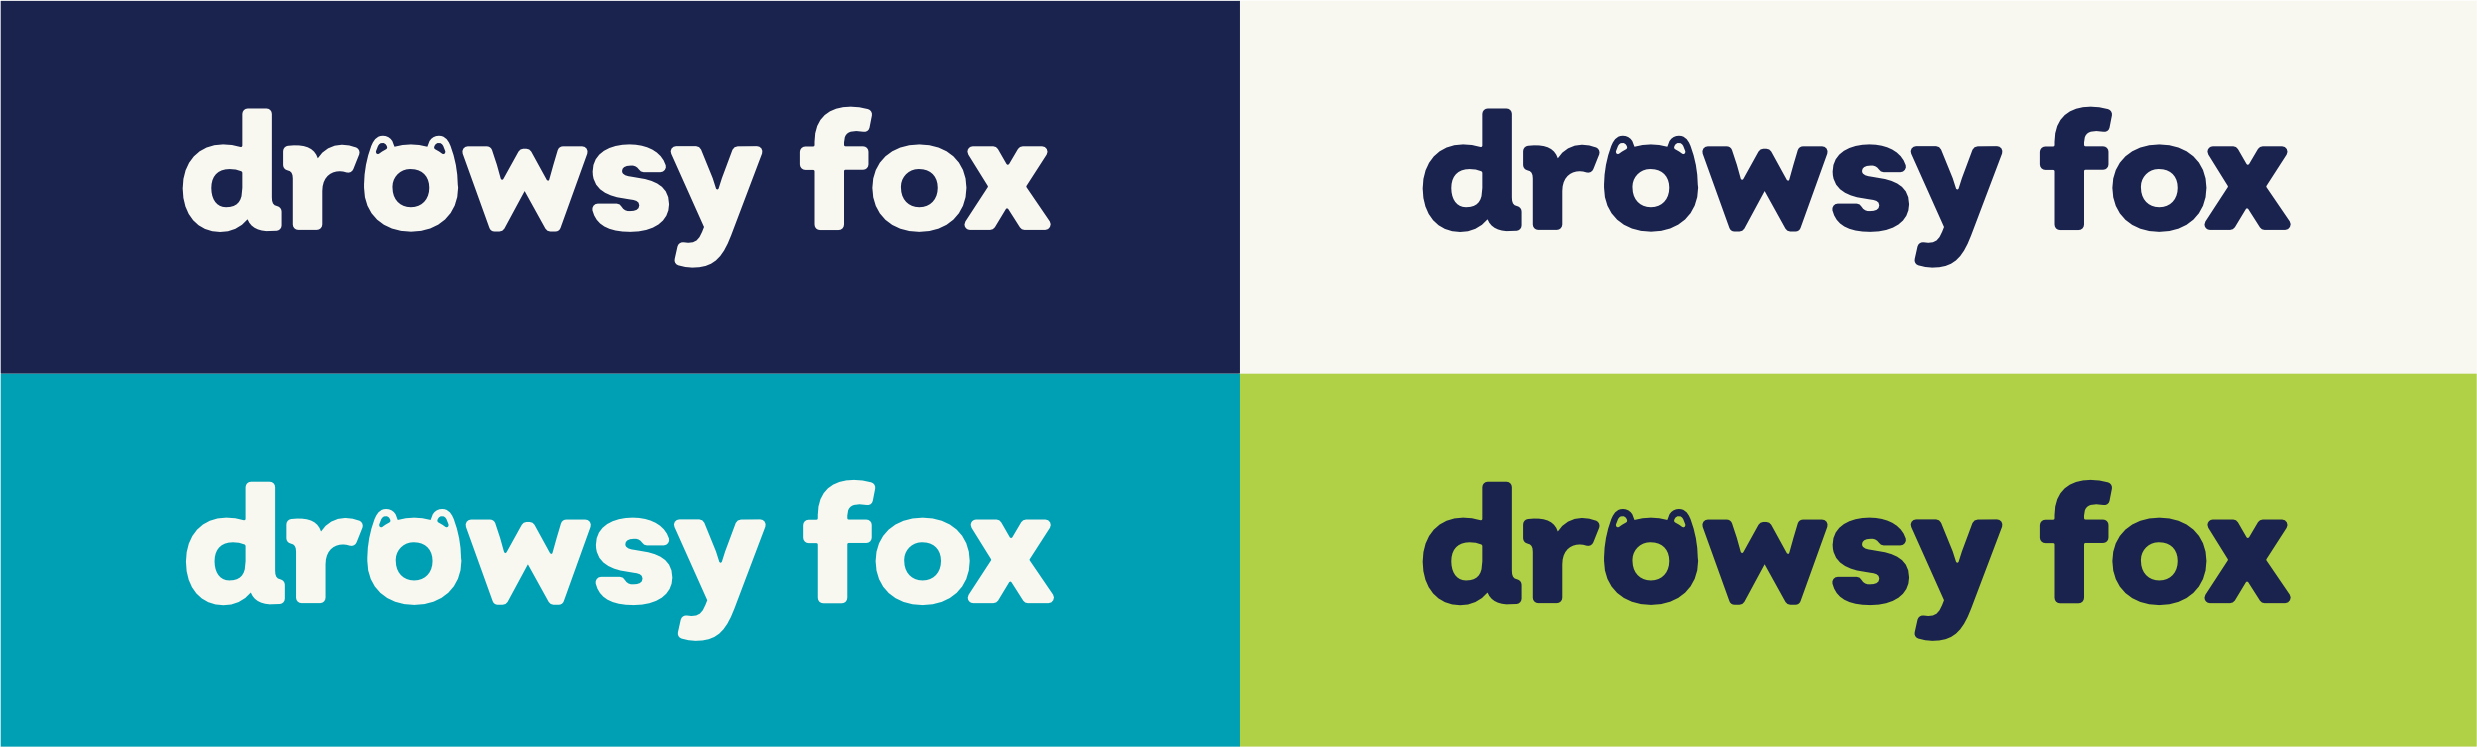 the drowsy fox logotype